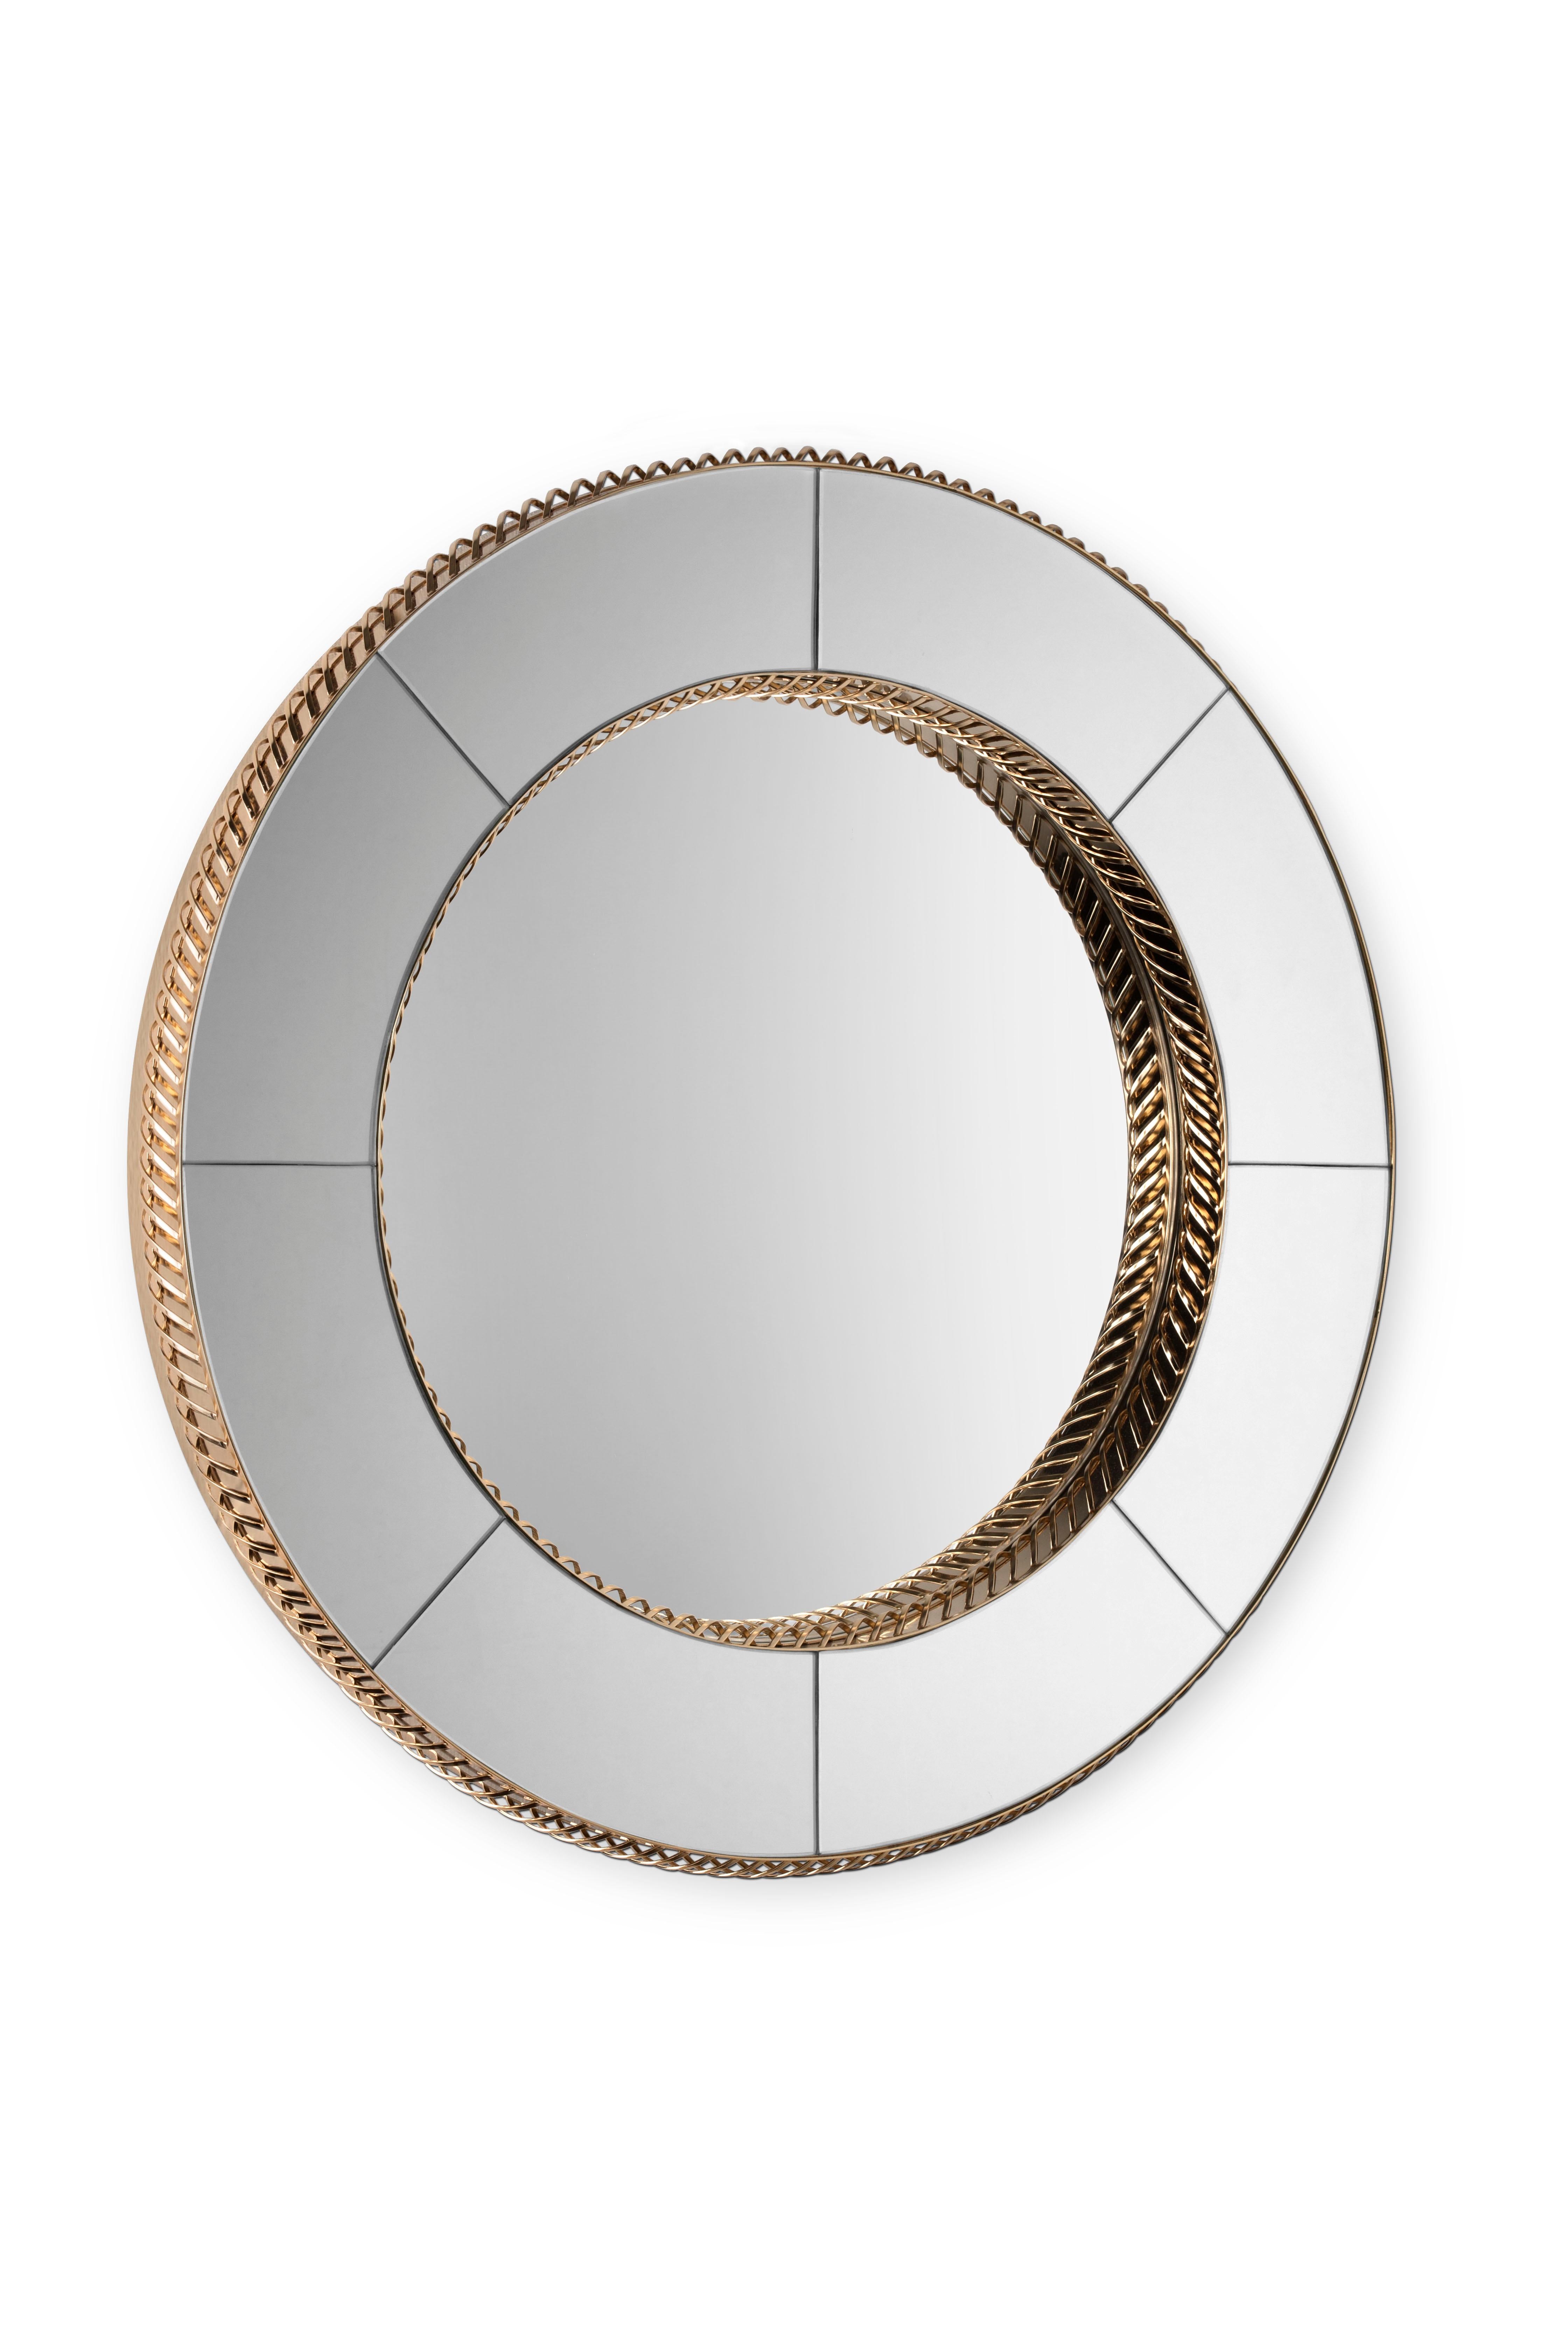 black and gold round mirror